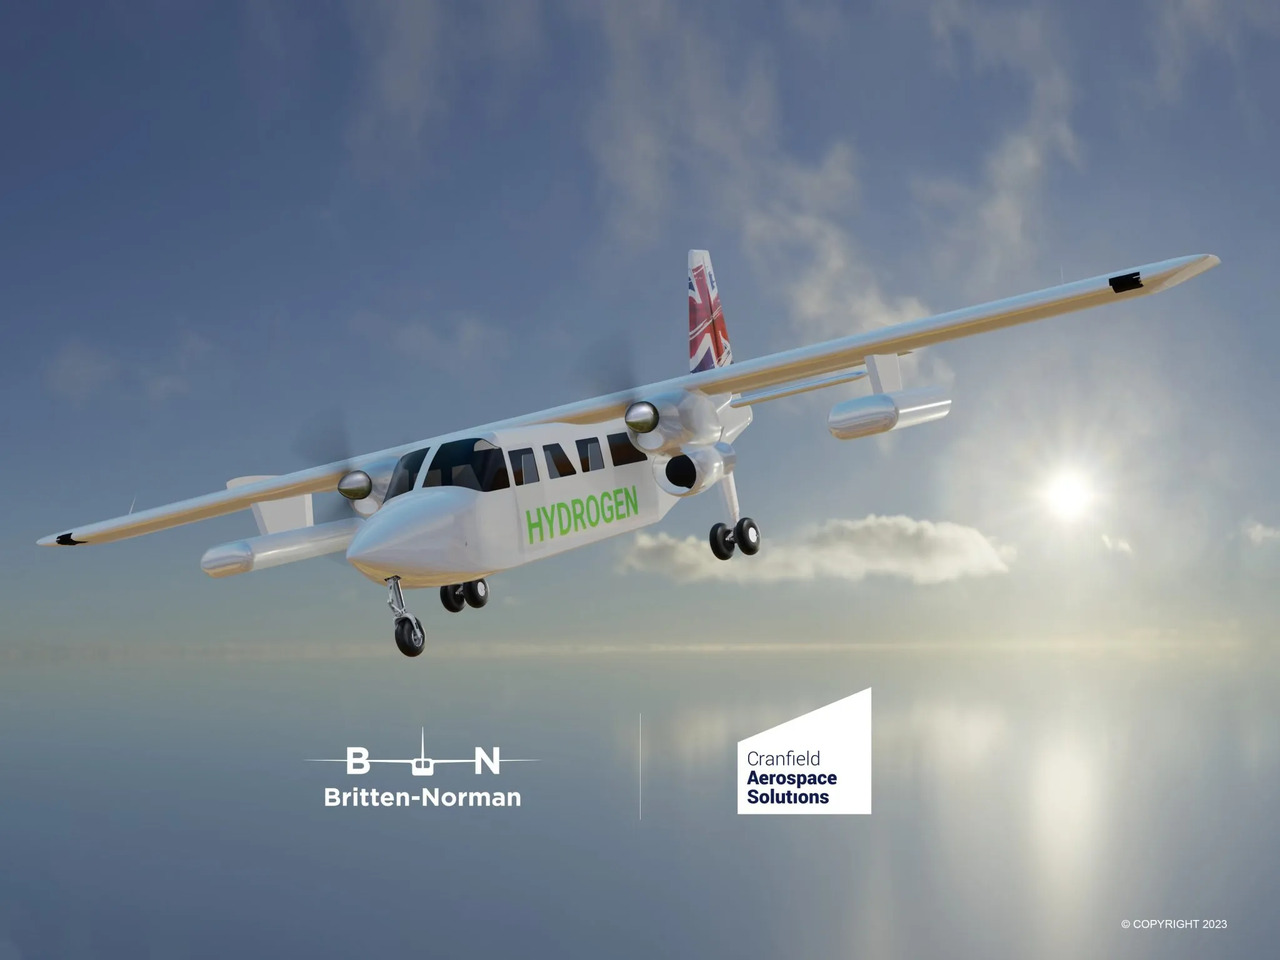 Render of new Britten Norman hydrogen-electric aircraft.